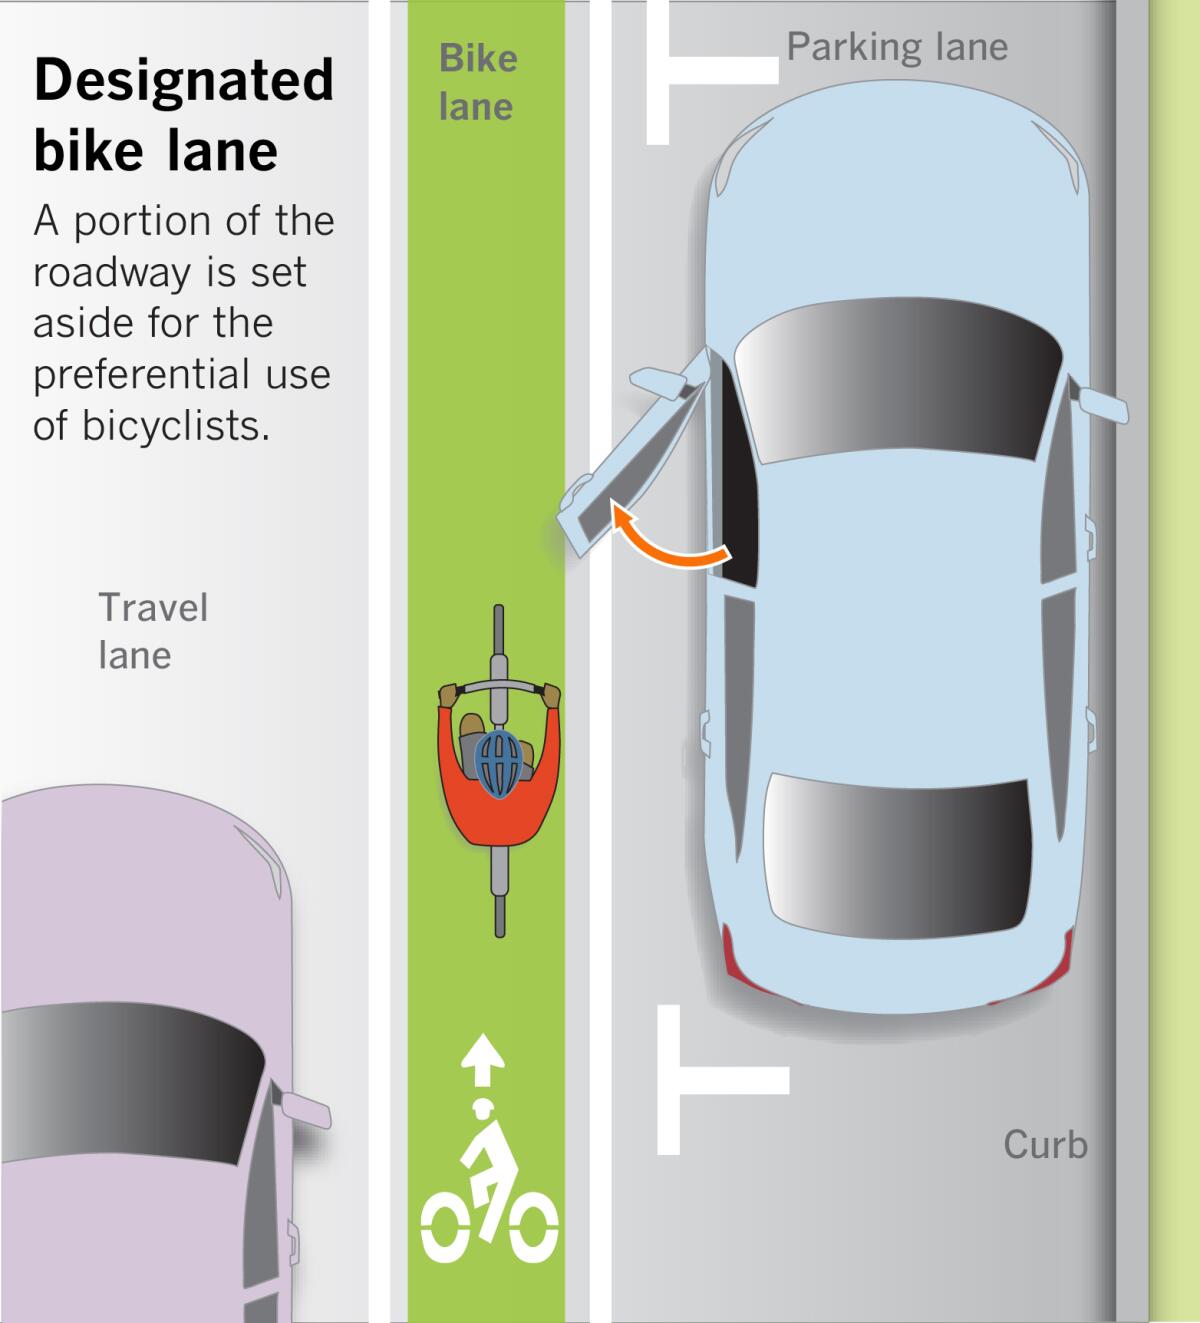 Graphic showing designated bike lane.